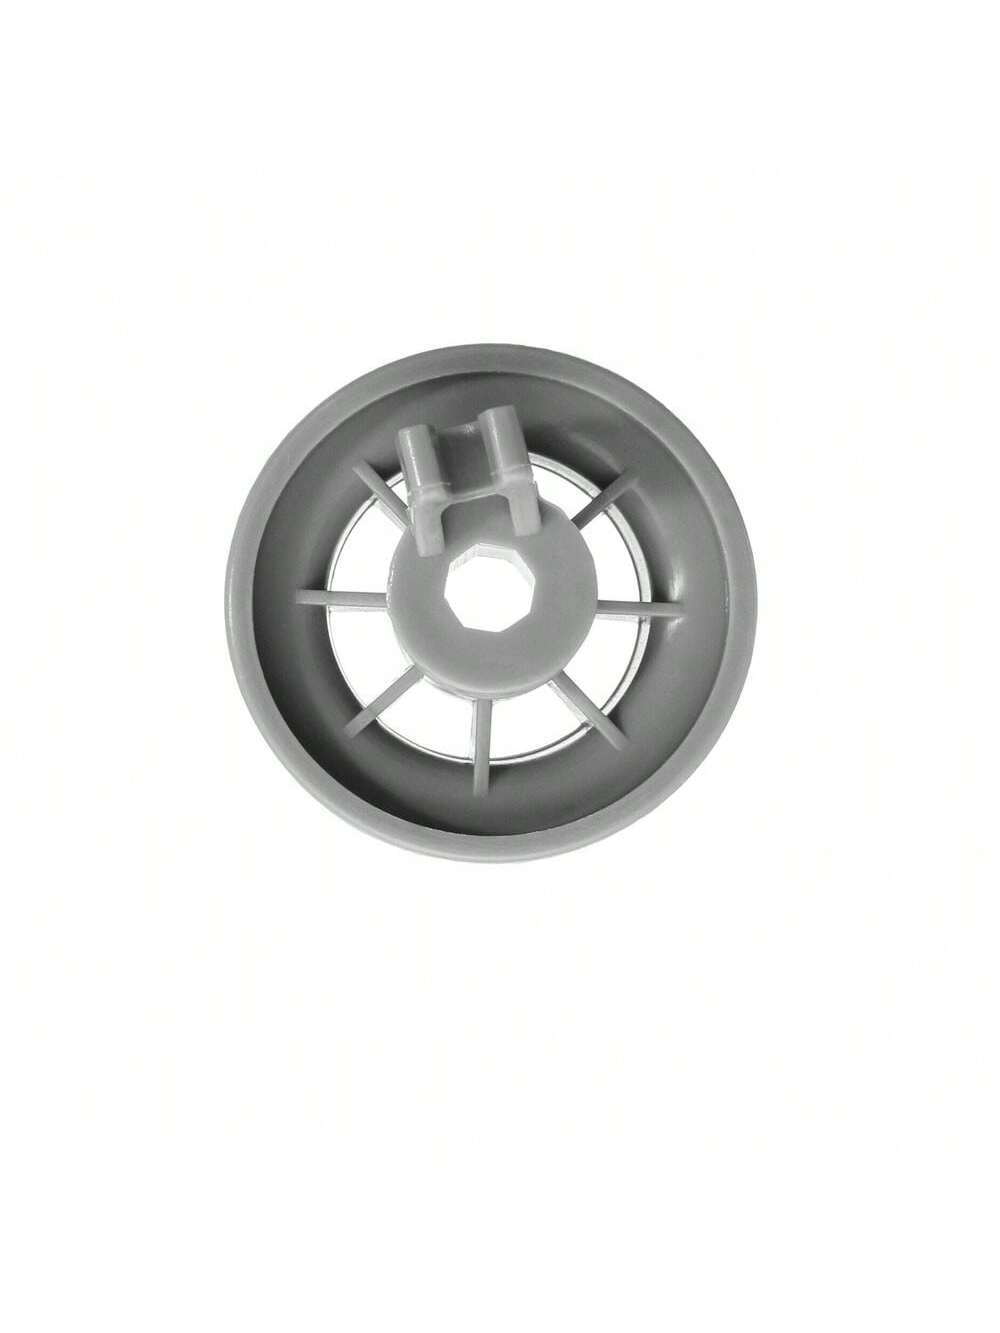 ( 8 Pack )165314 Dishwasher Lower Rack Wheels UPGRADED Fit For Bosch Kenmore Dishwasher 165314 Dishwasher Wheels Replace 420198 AP2802428 PS3439123 423232 EAP3439123 PS8697067 Dishwasher Rack Number-Grey-10